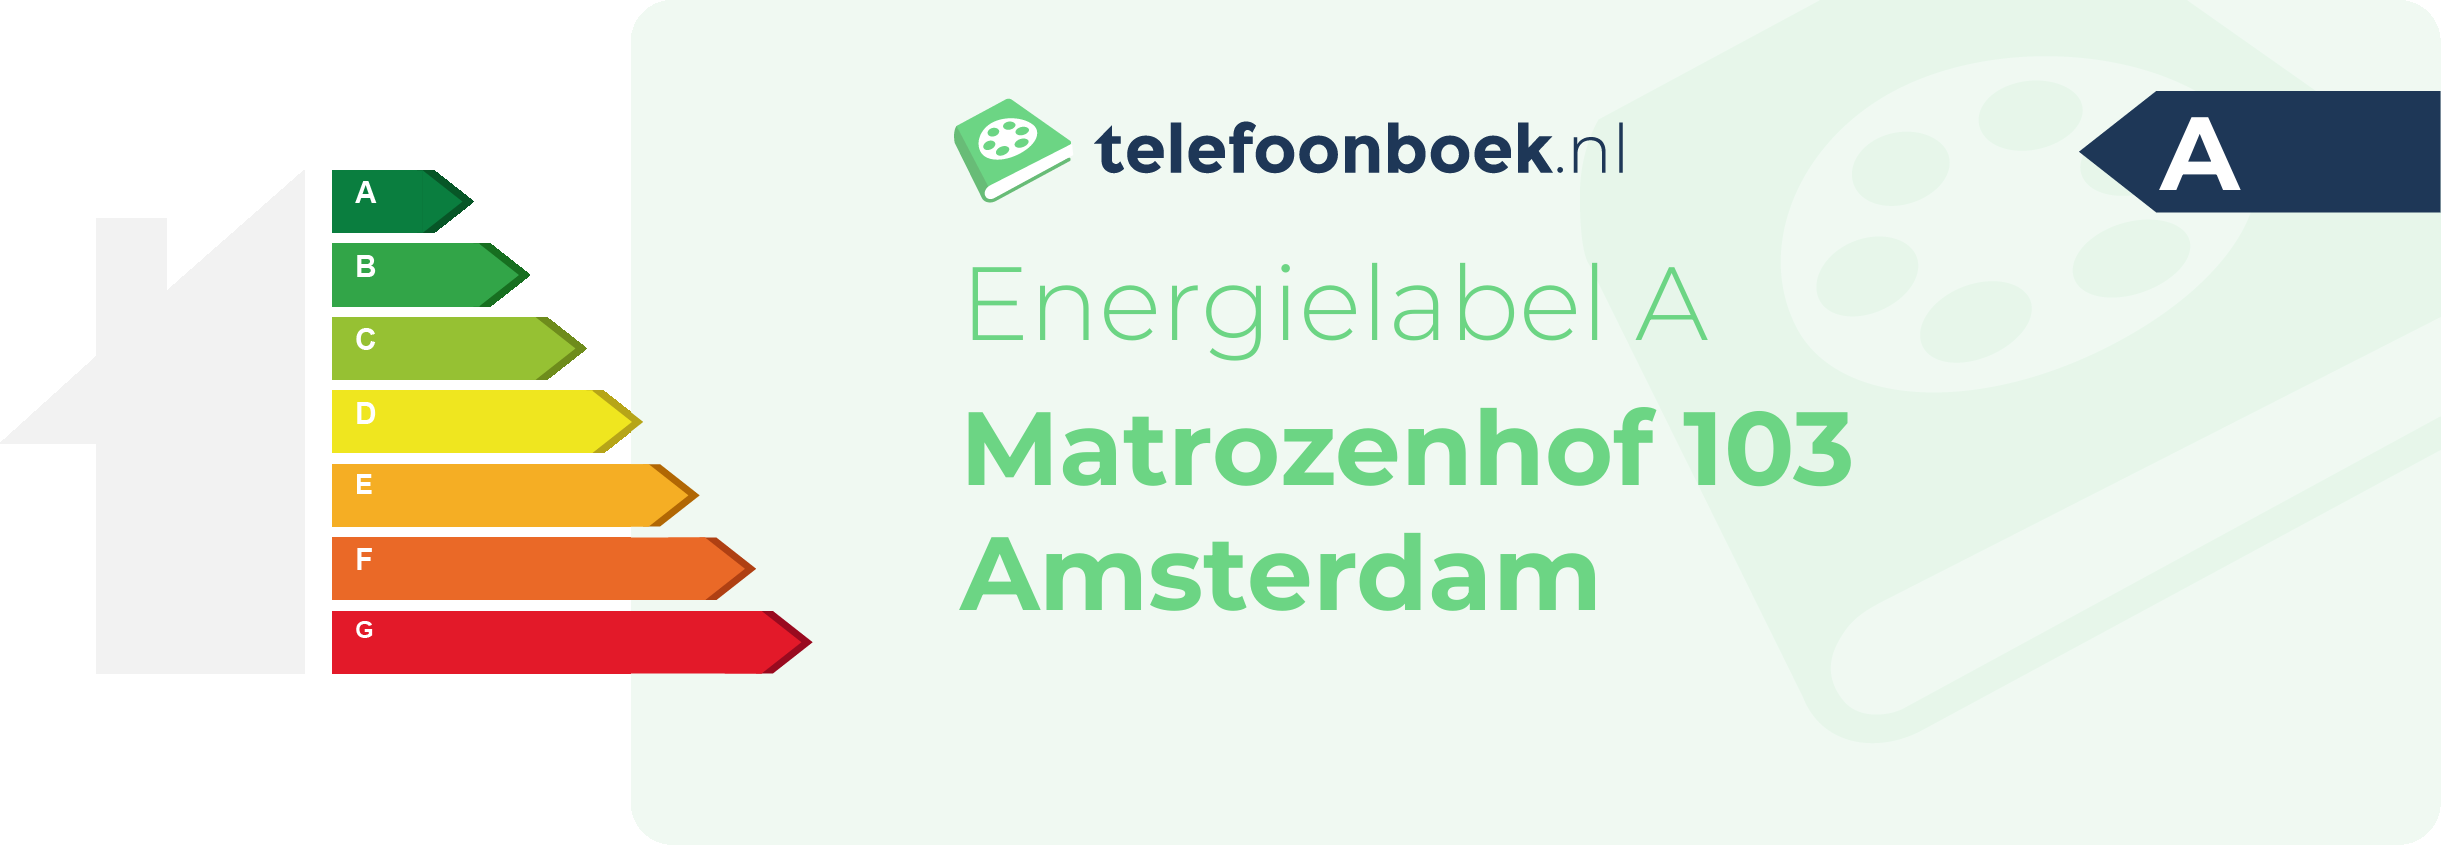 Energielabel Matrozenhof 103 Amsterdam